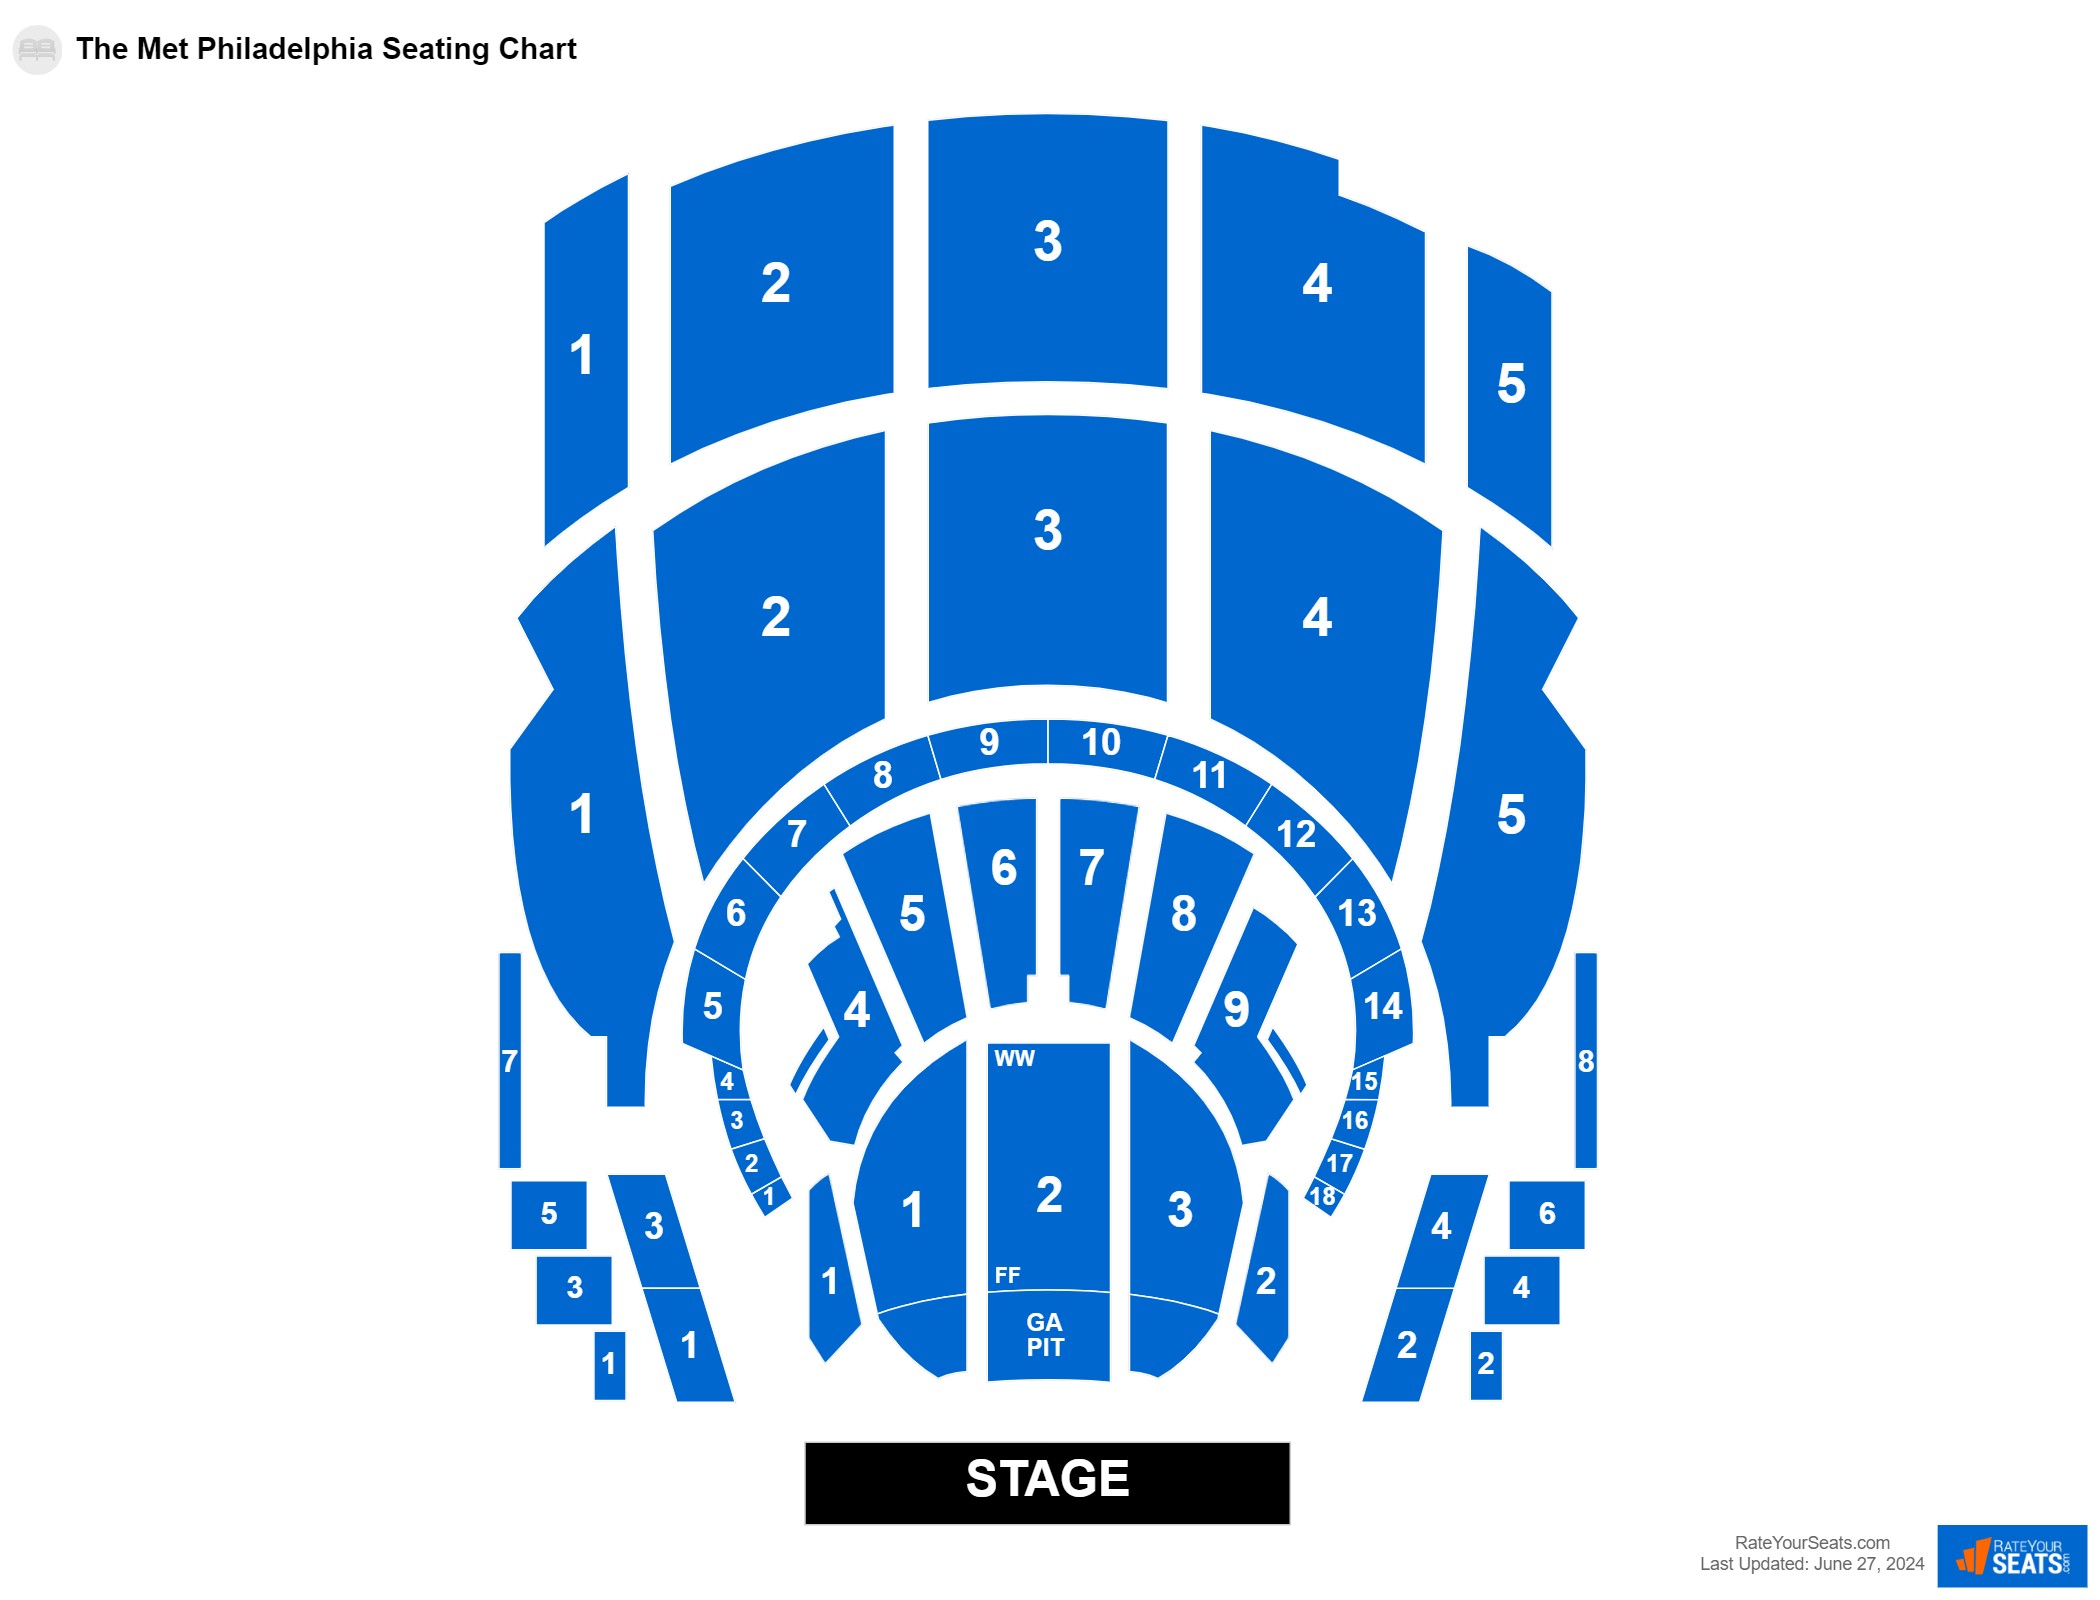 Concert seating chart at The Met Philadelphia